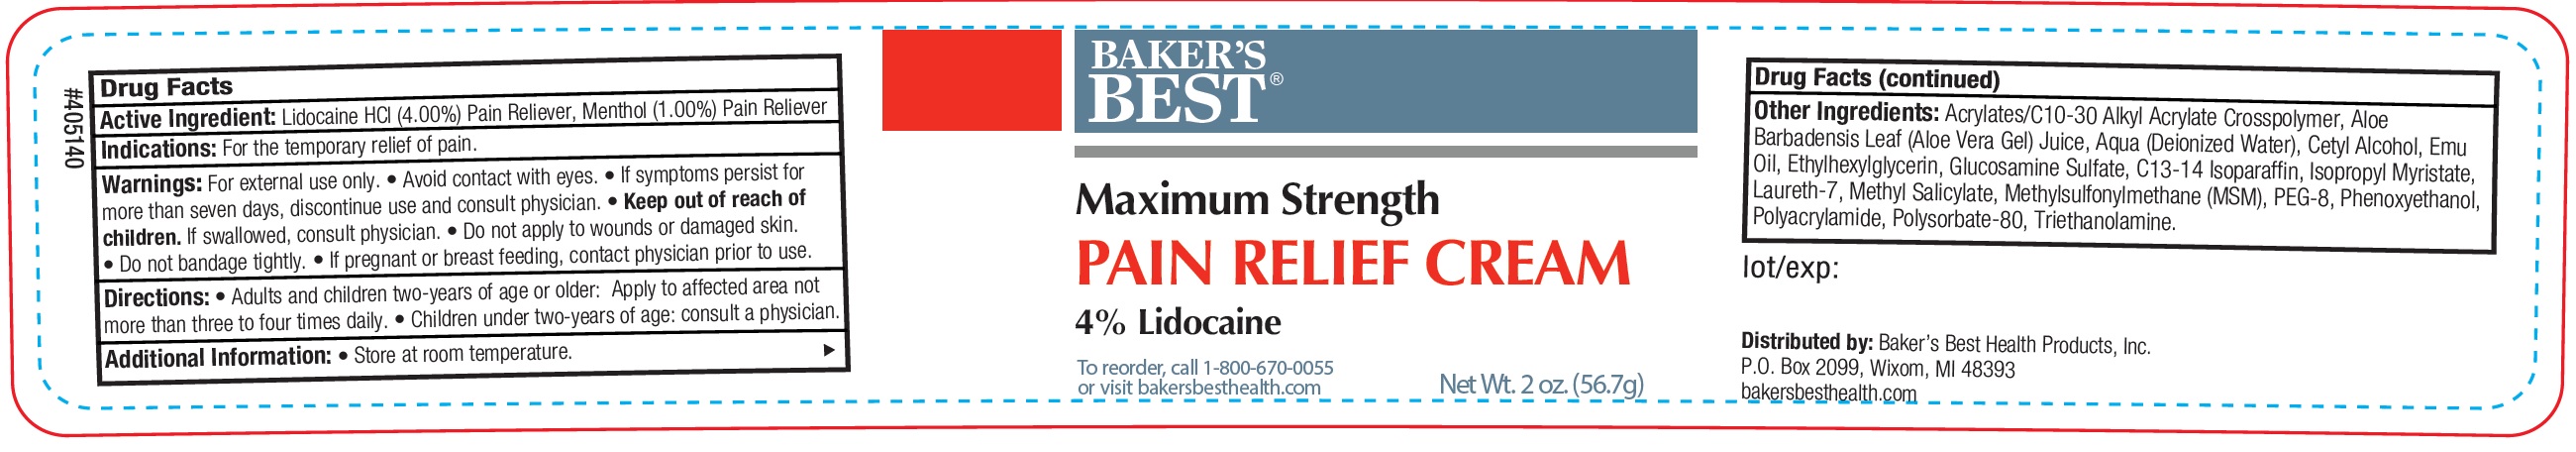 Baker's Best Maximum Strength Pain Relief | Lidocaine Hydrochloride, Menthol Cream while Breastfeeding